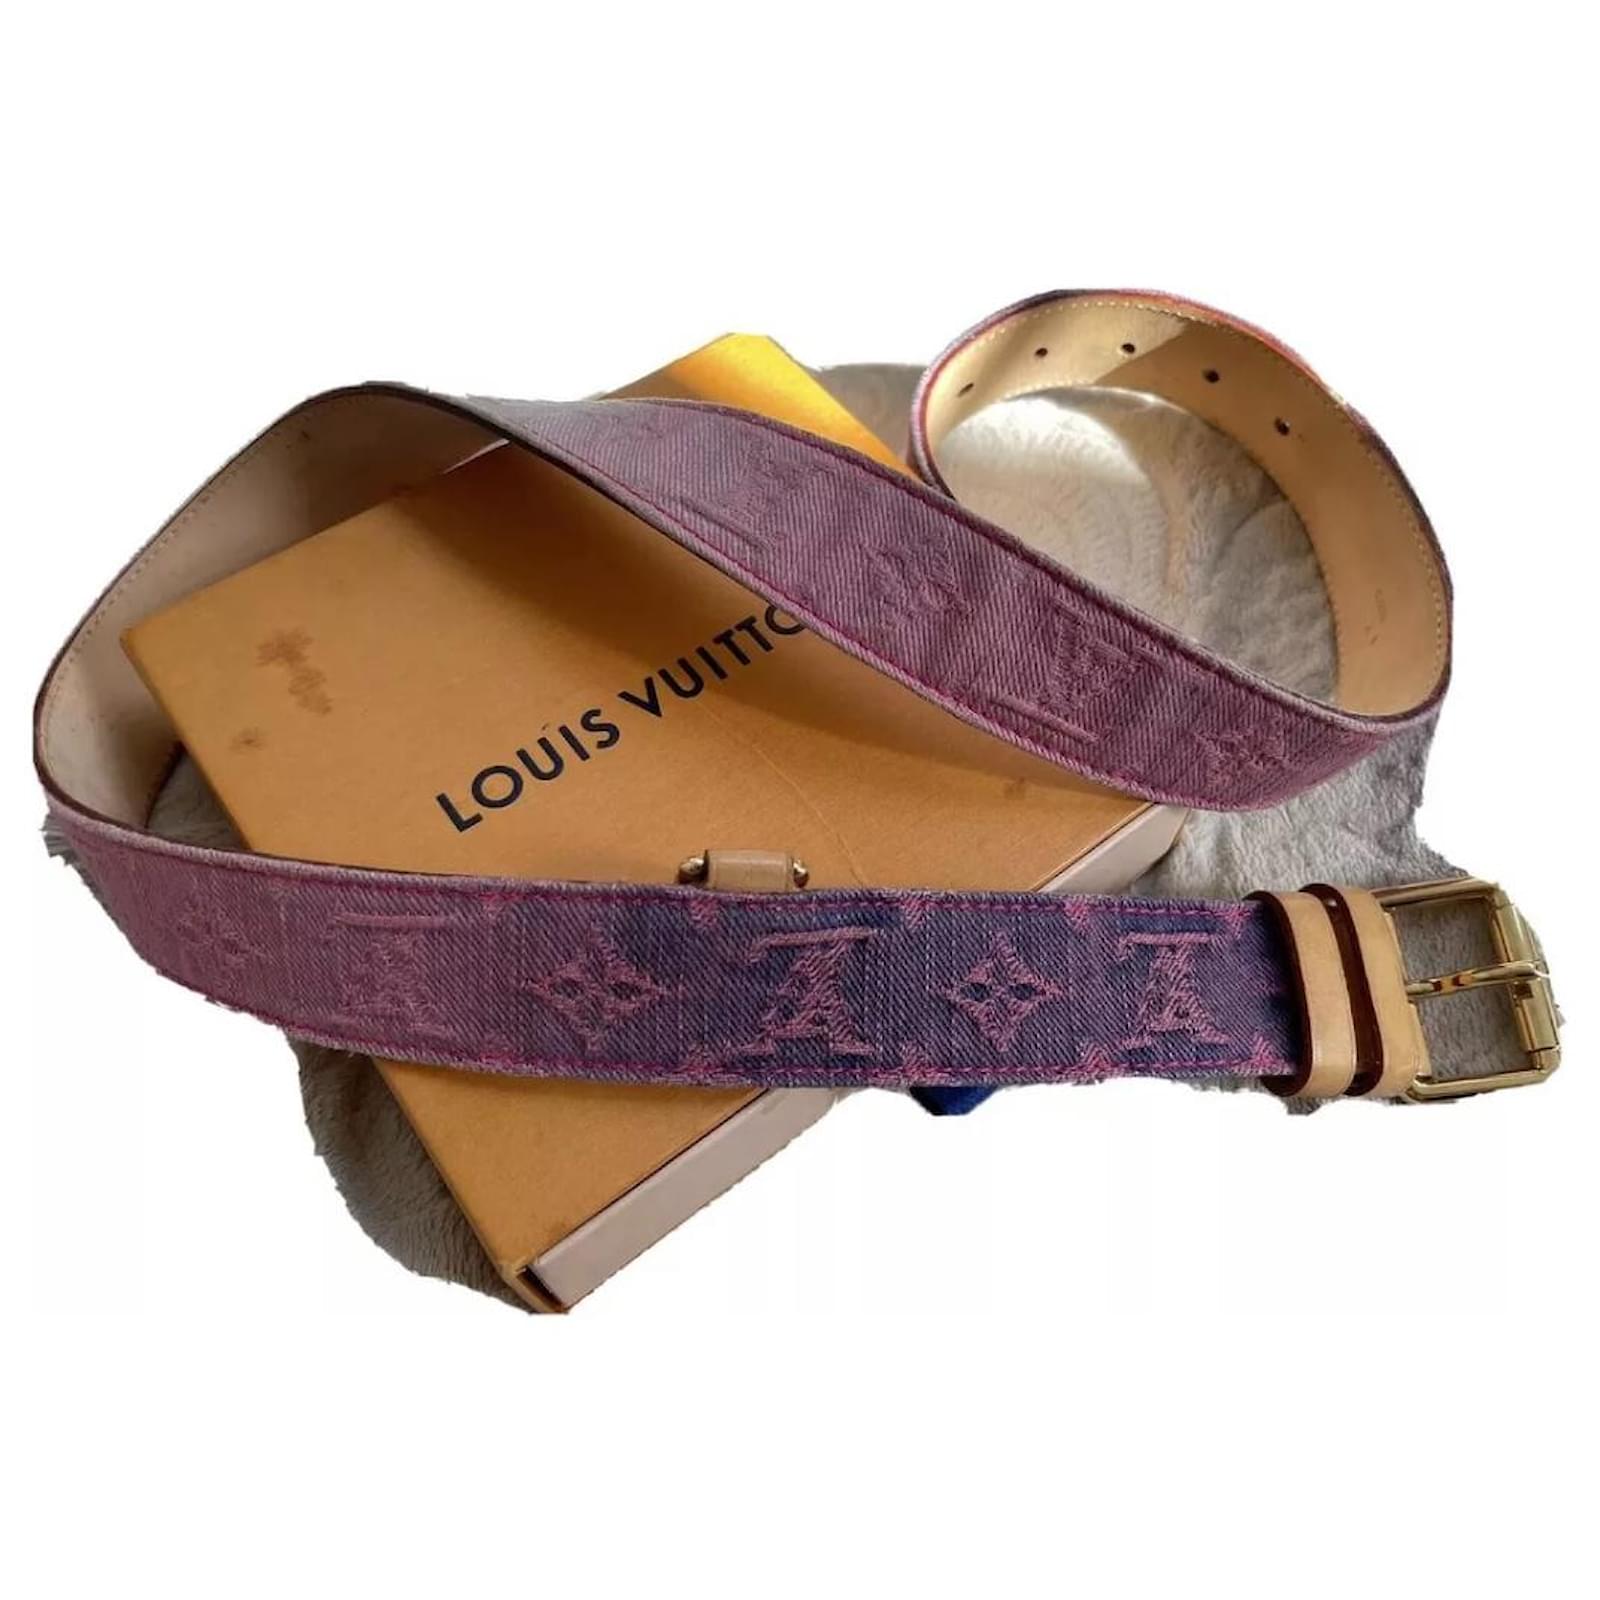 LOUIS VUITTON Monogram Belt belt brown purple